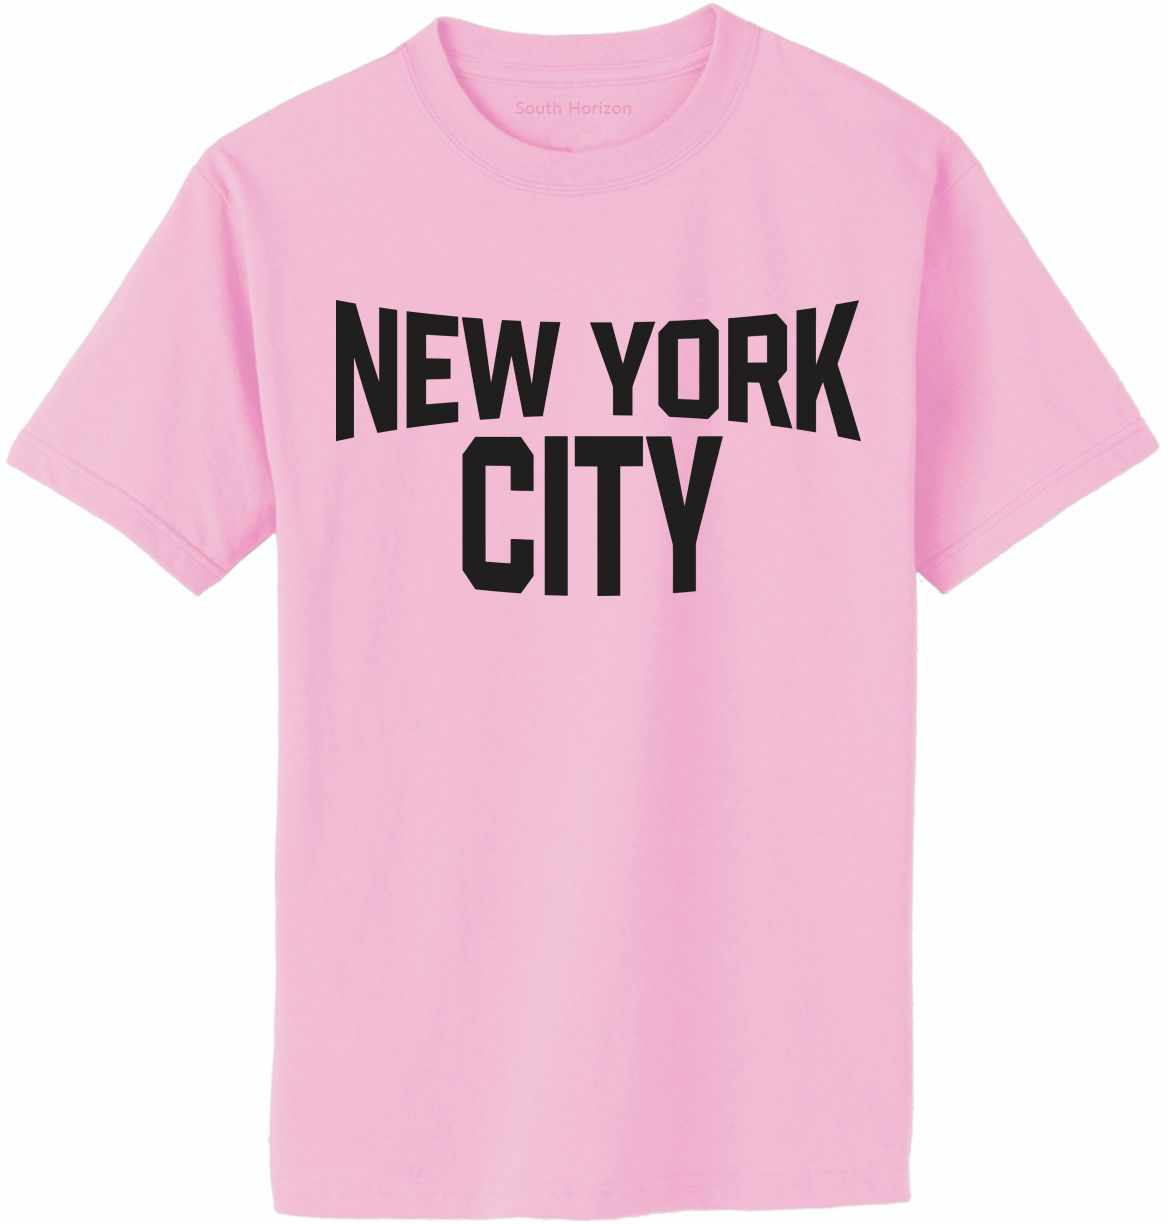 New York City on Adult T-Shirt (#1194-1)